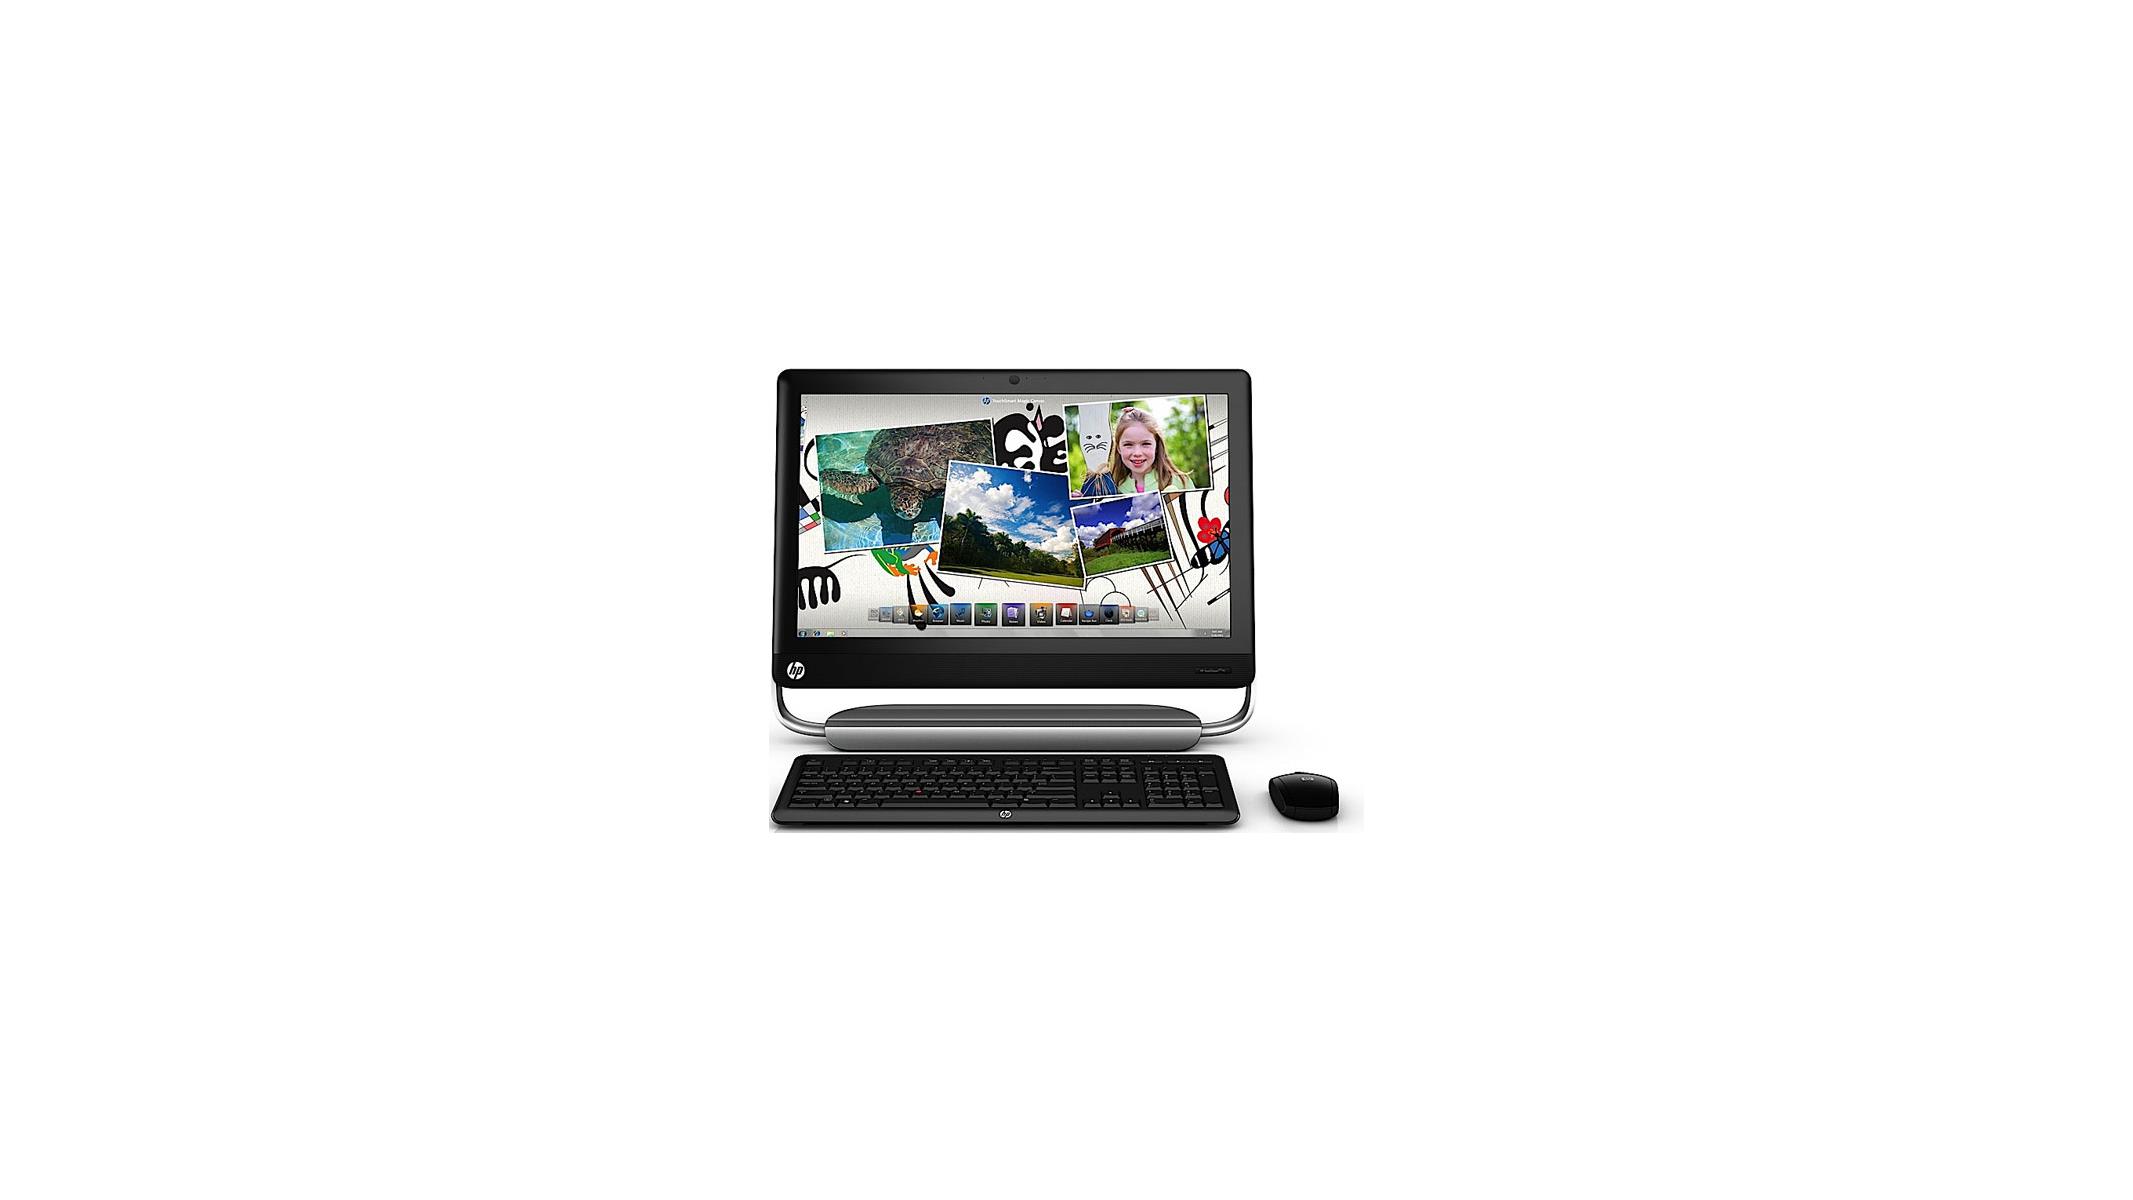 TouchSmart 320-1100 Desktop PC series